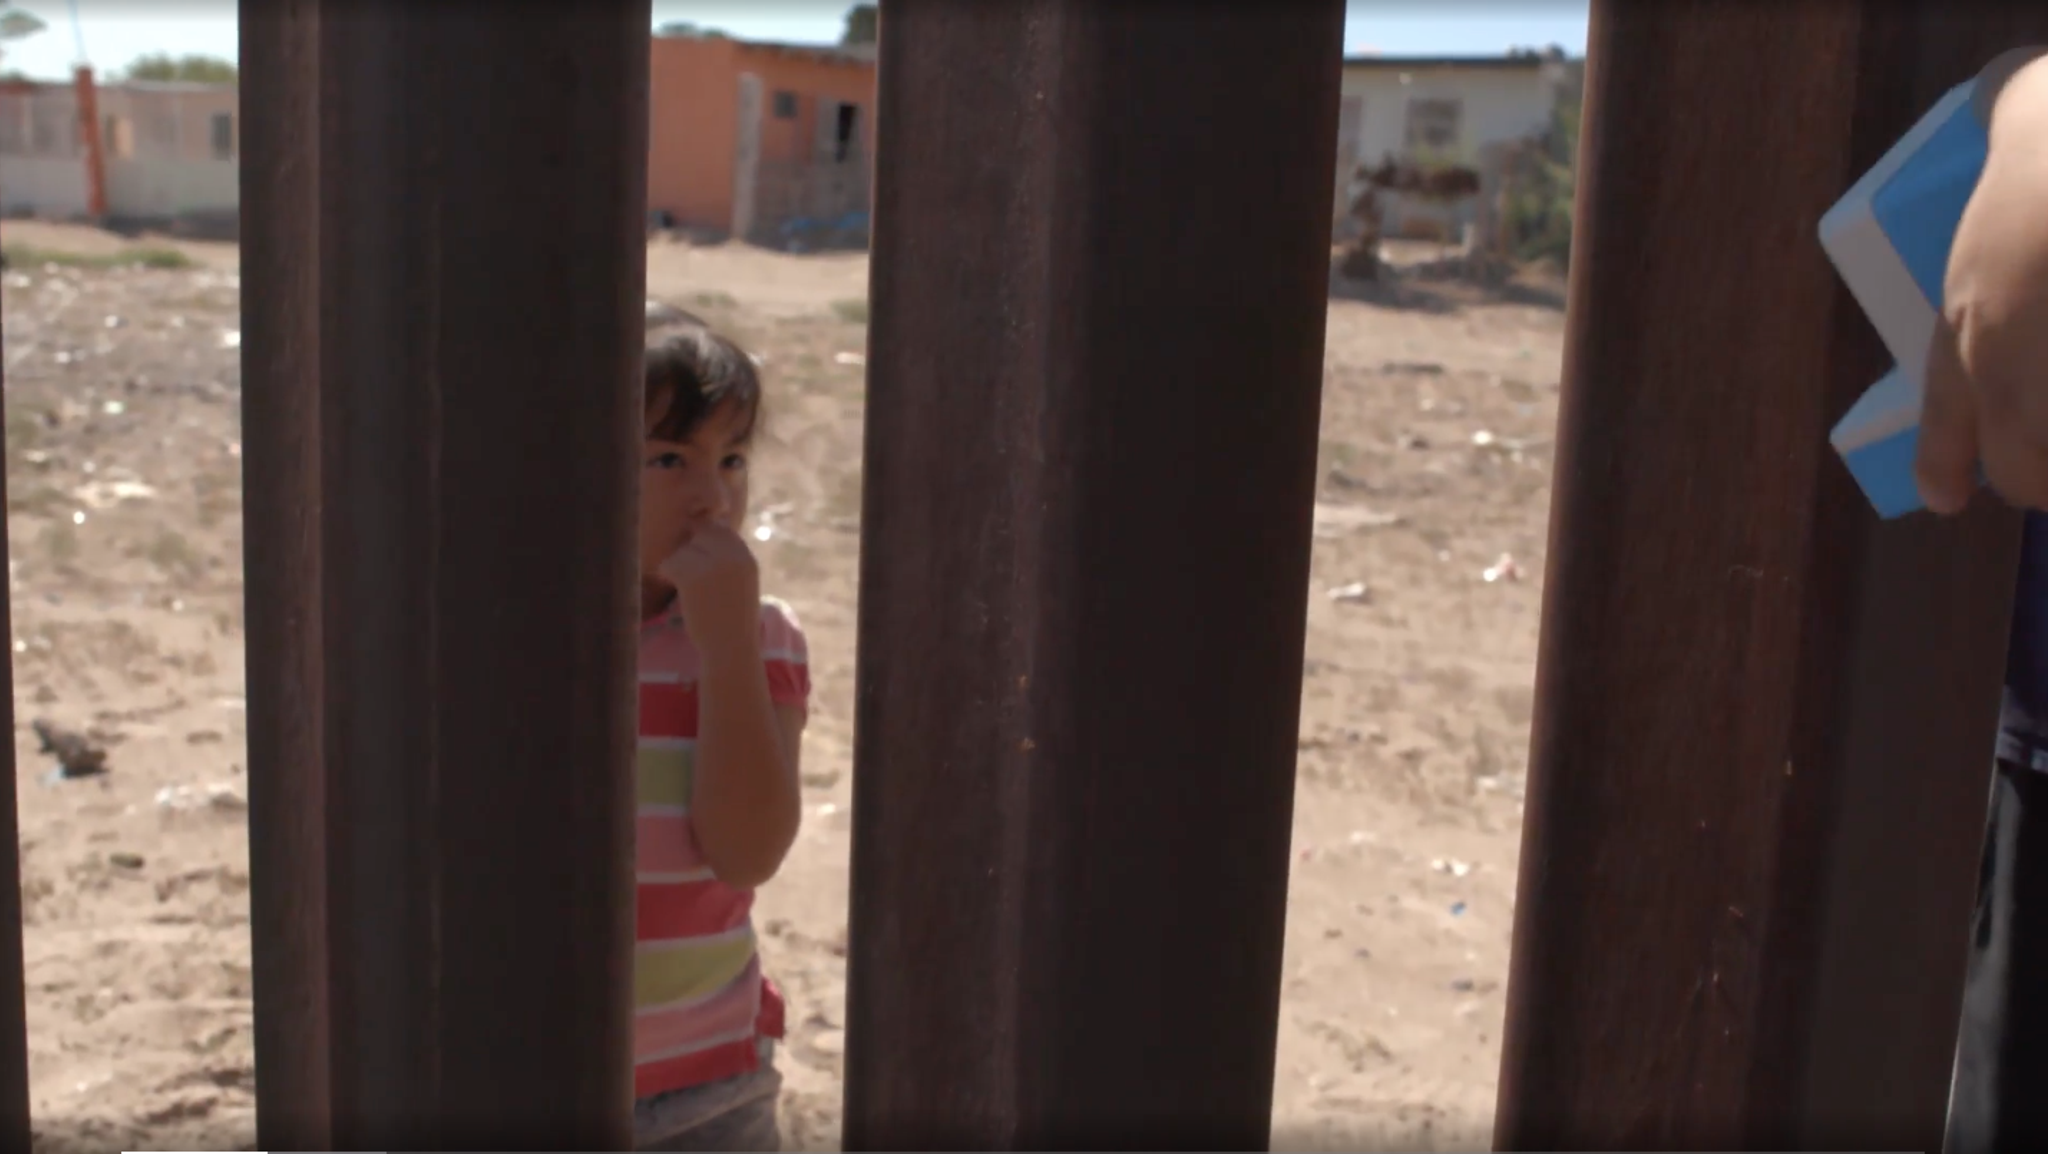 Borderlands film shows the human side of immigration